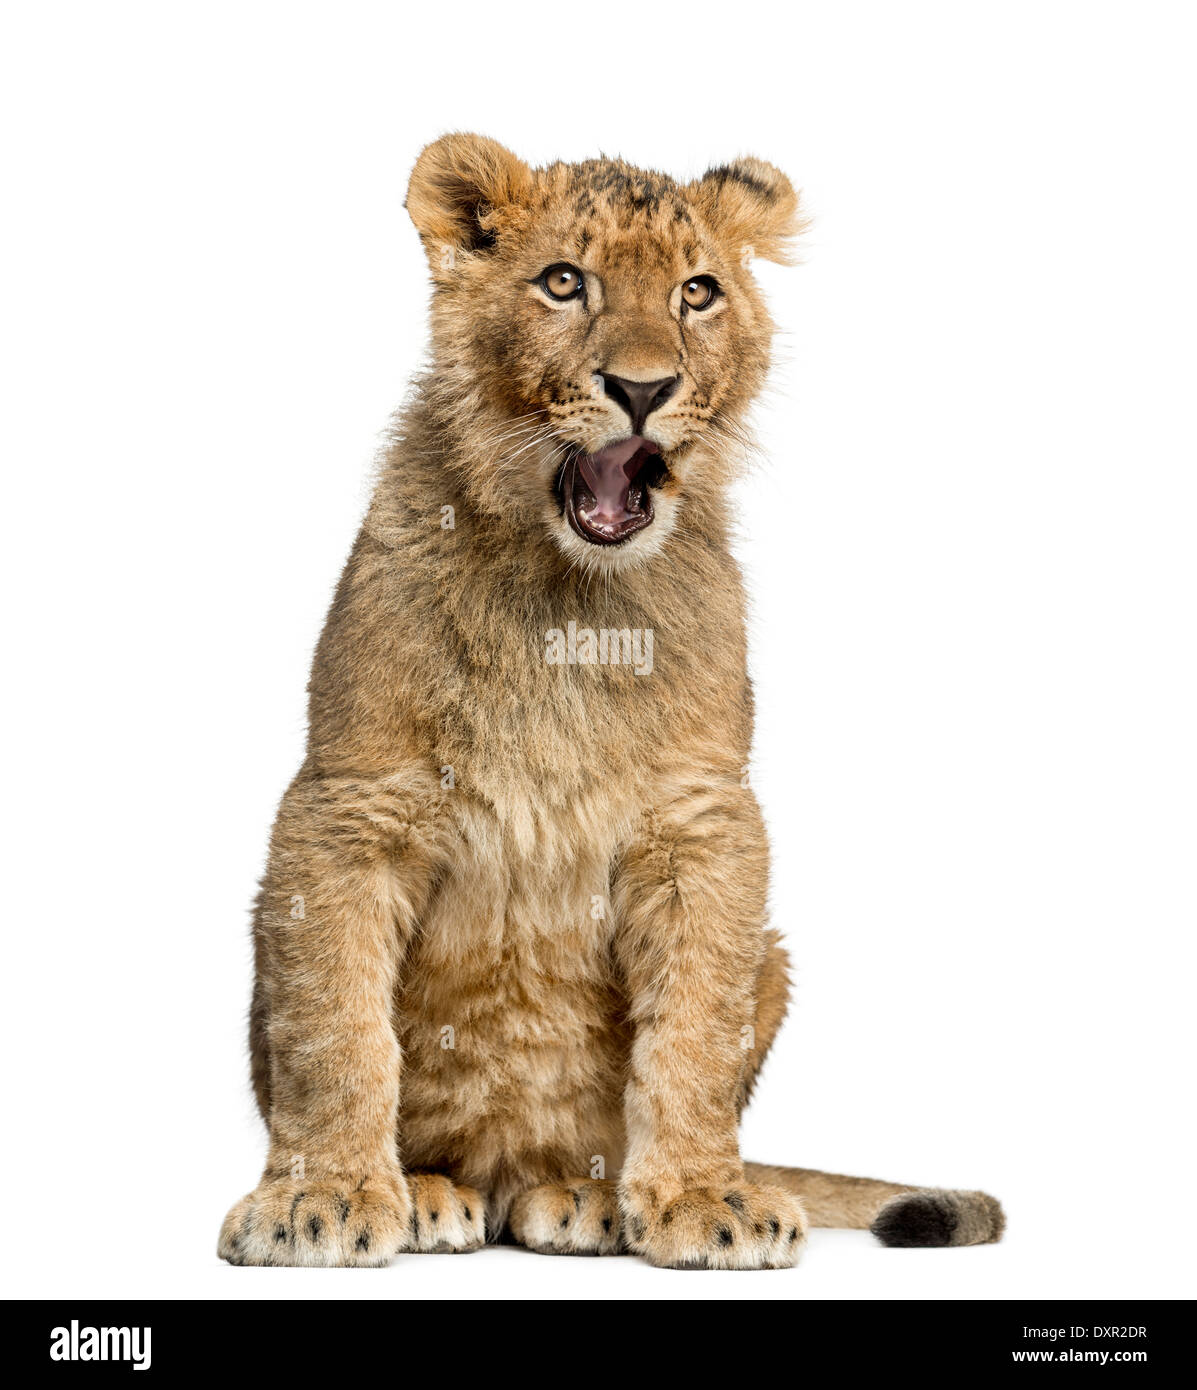 Lion cub sitting and yawning against white background Stock Photo